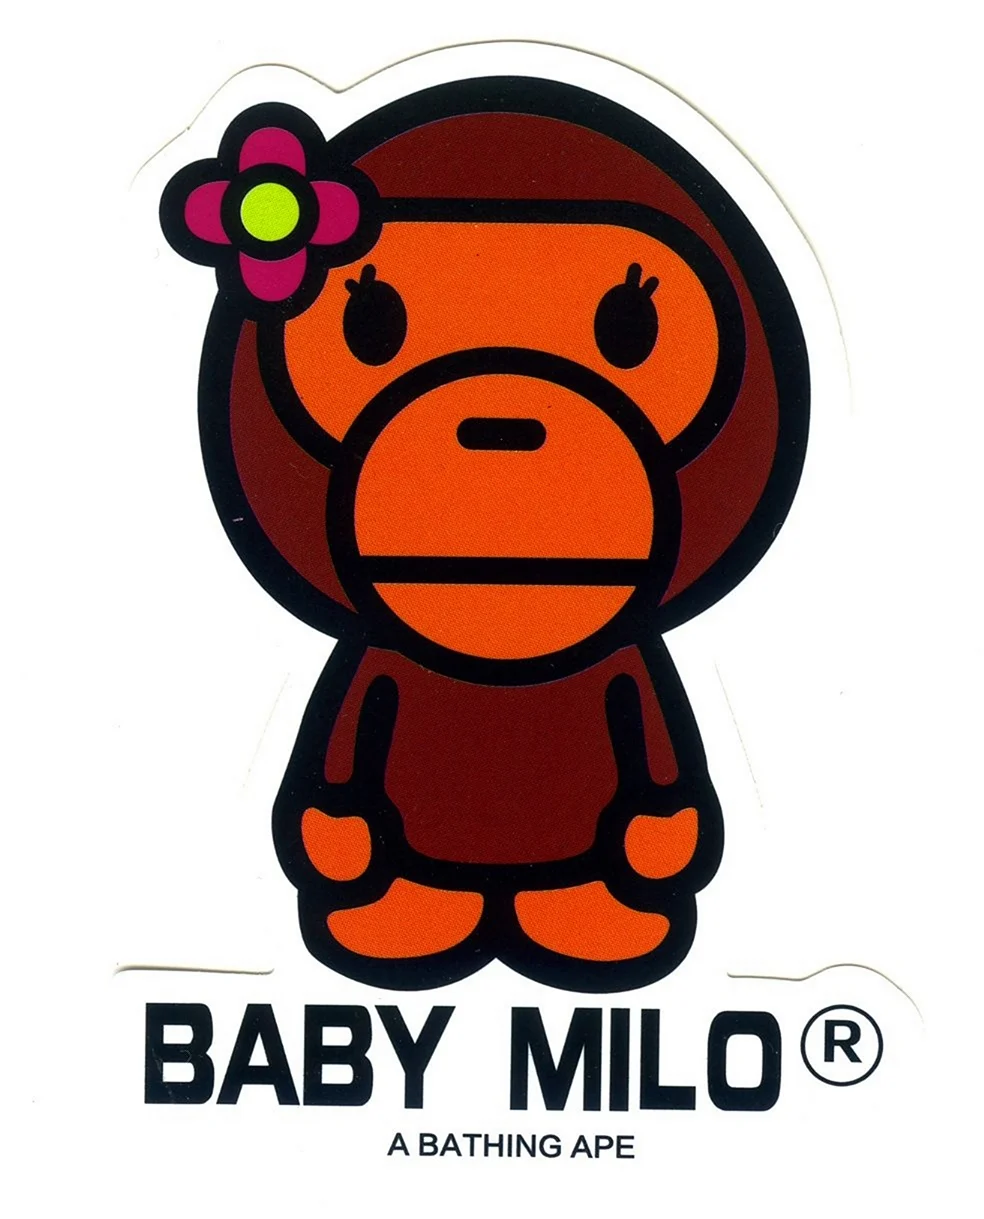 Bape Baby Milo logo